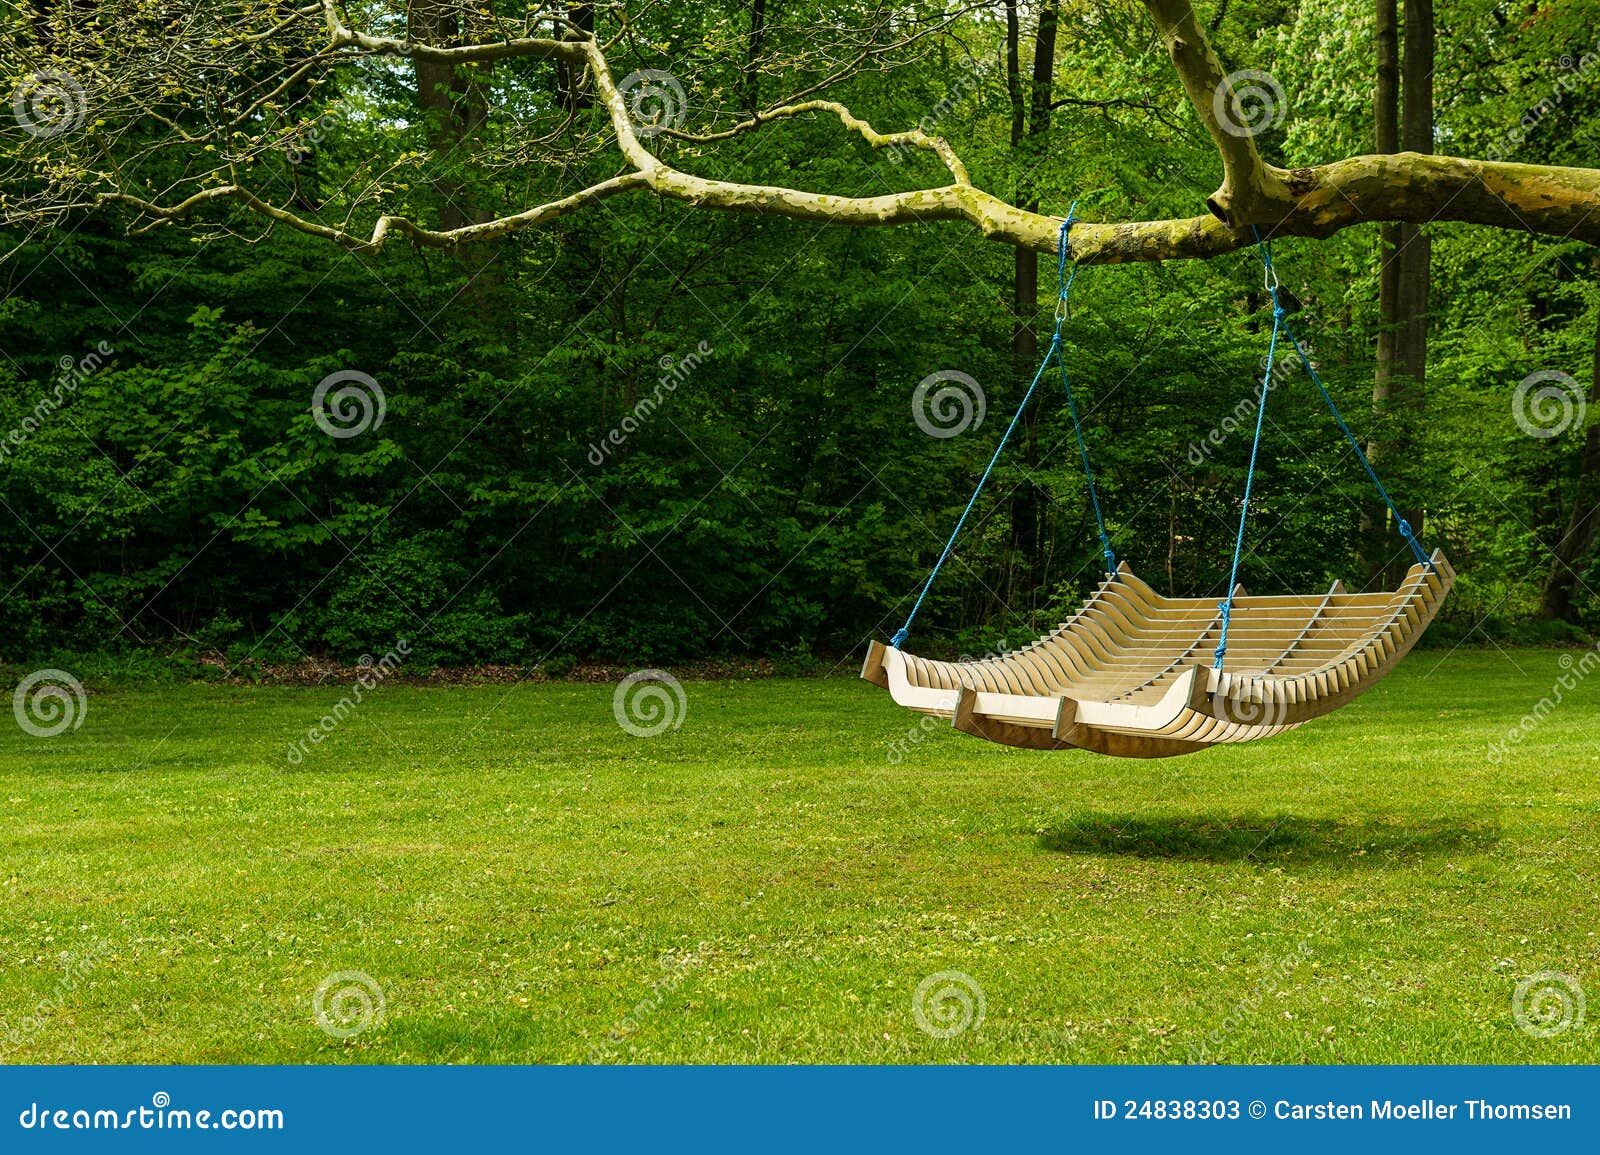 Swing Bench In Lush Garden Stock Photos - Image: 24838303